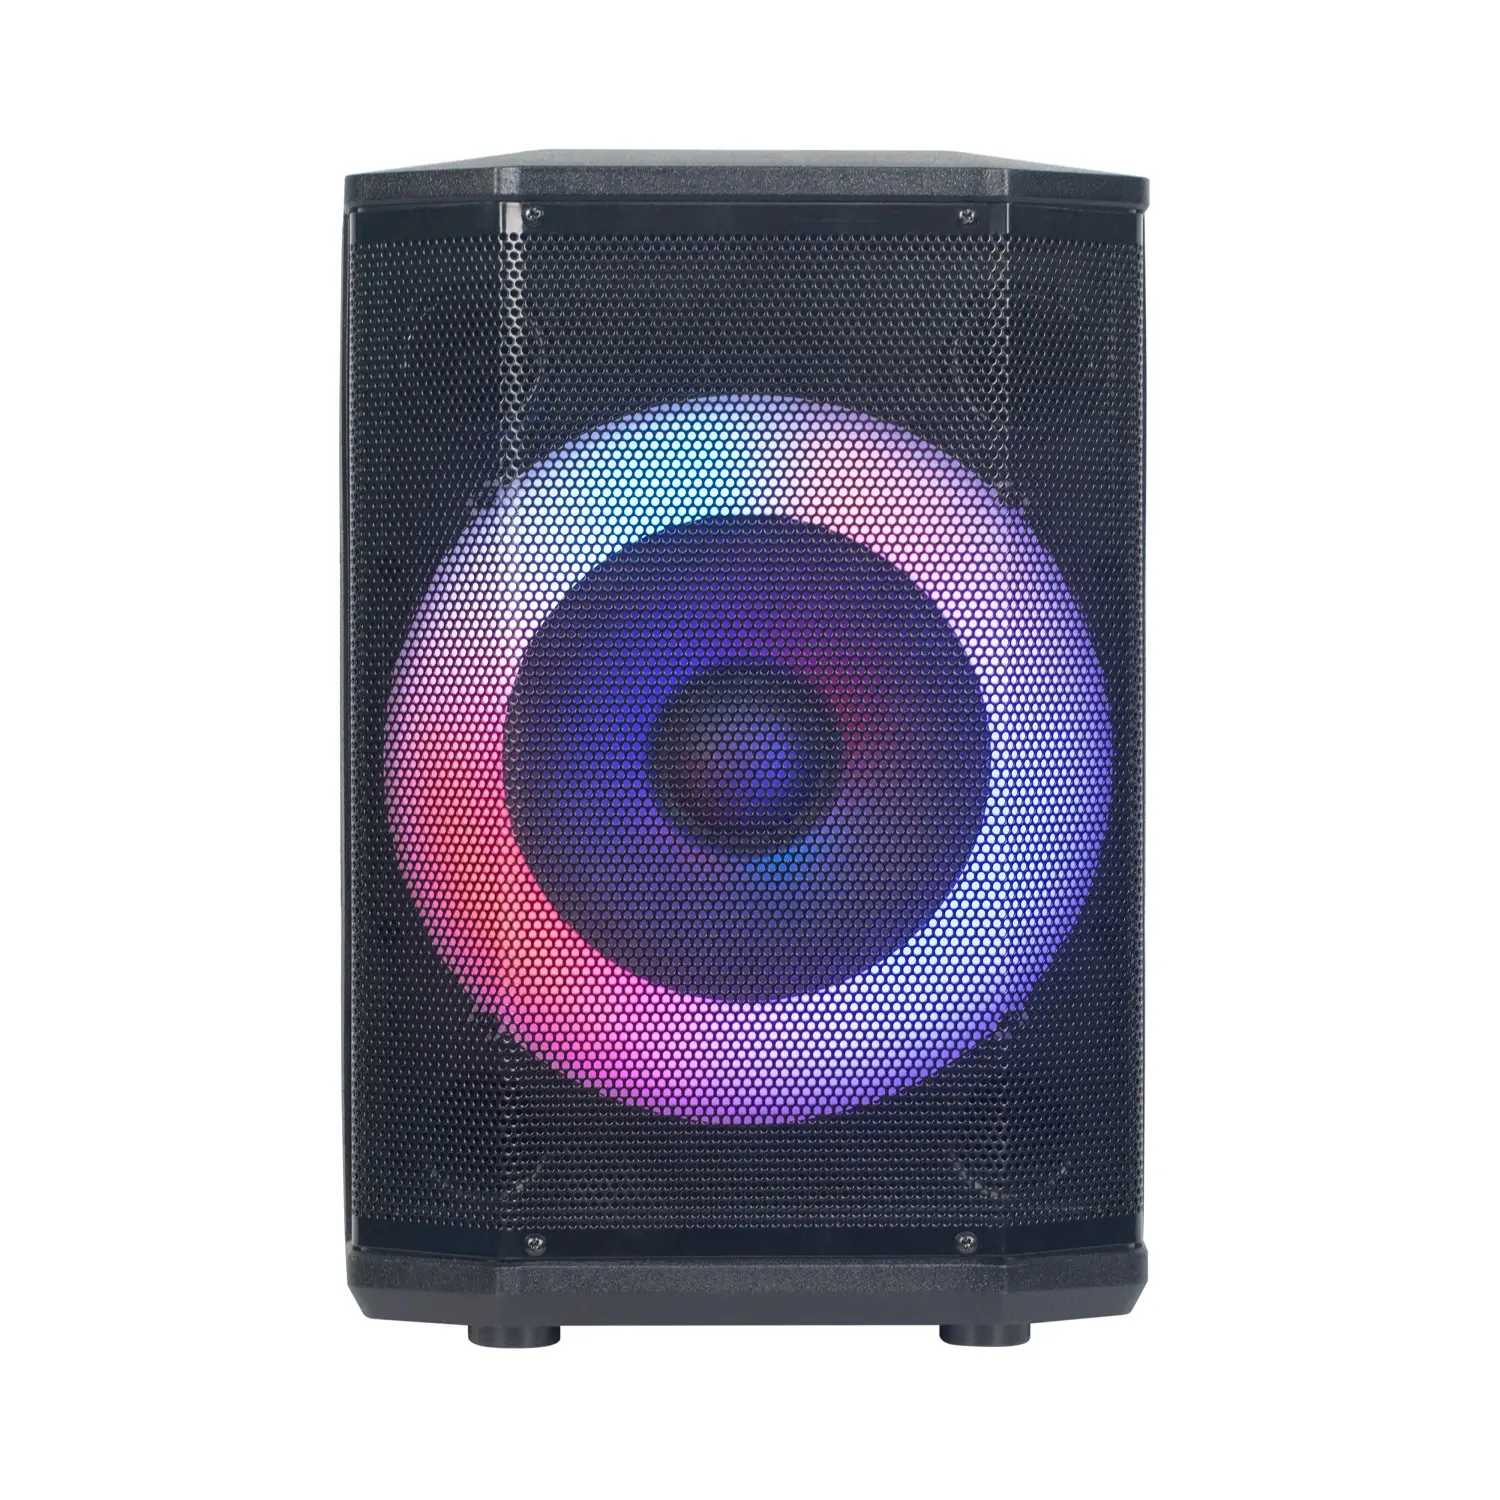 AILIPU mini 8 inch big power speaker with professional bass wireless karaoke harman kardon system sound box